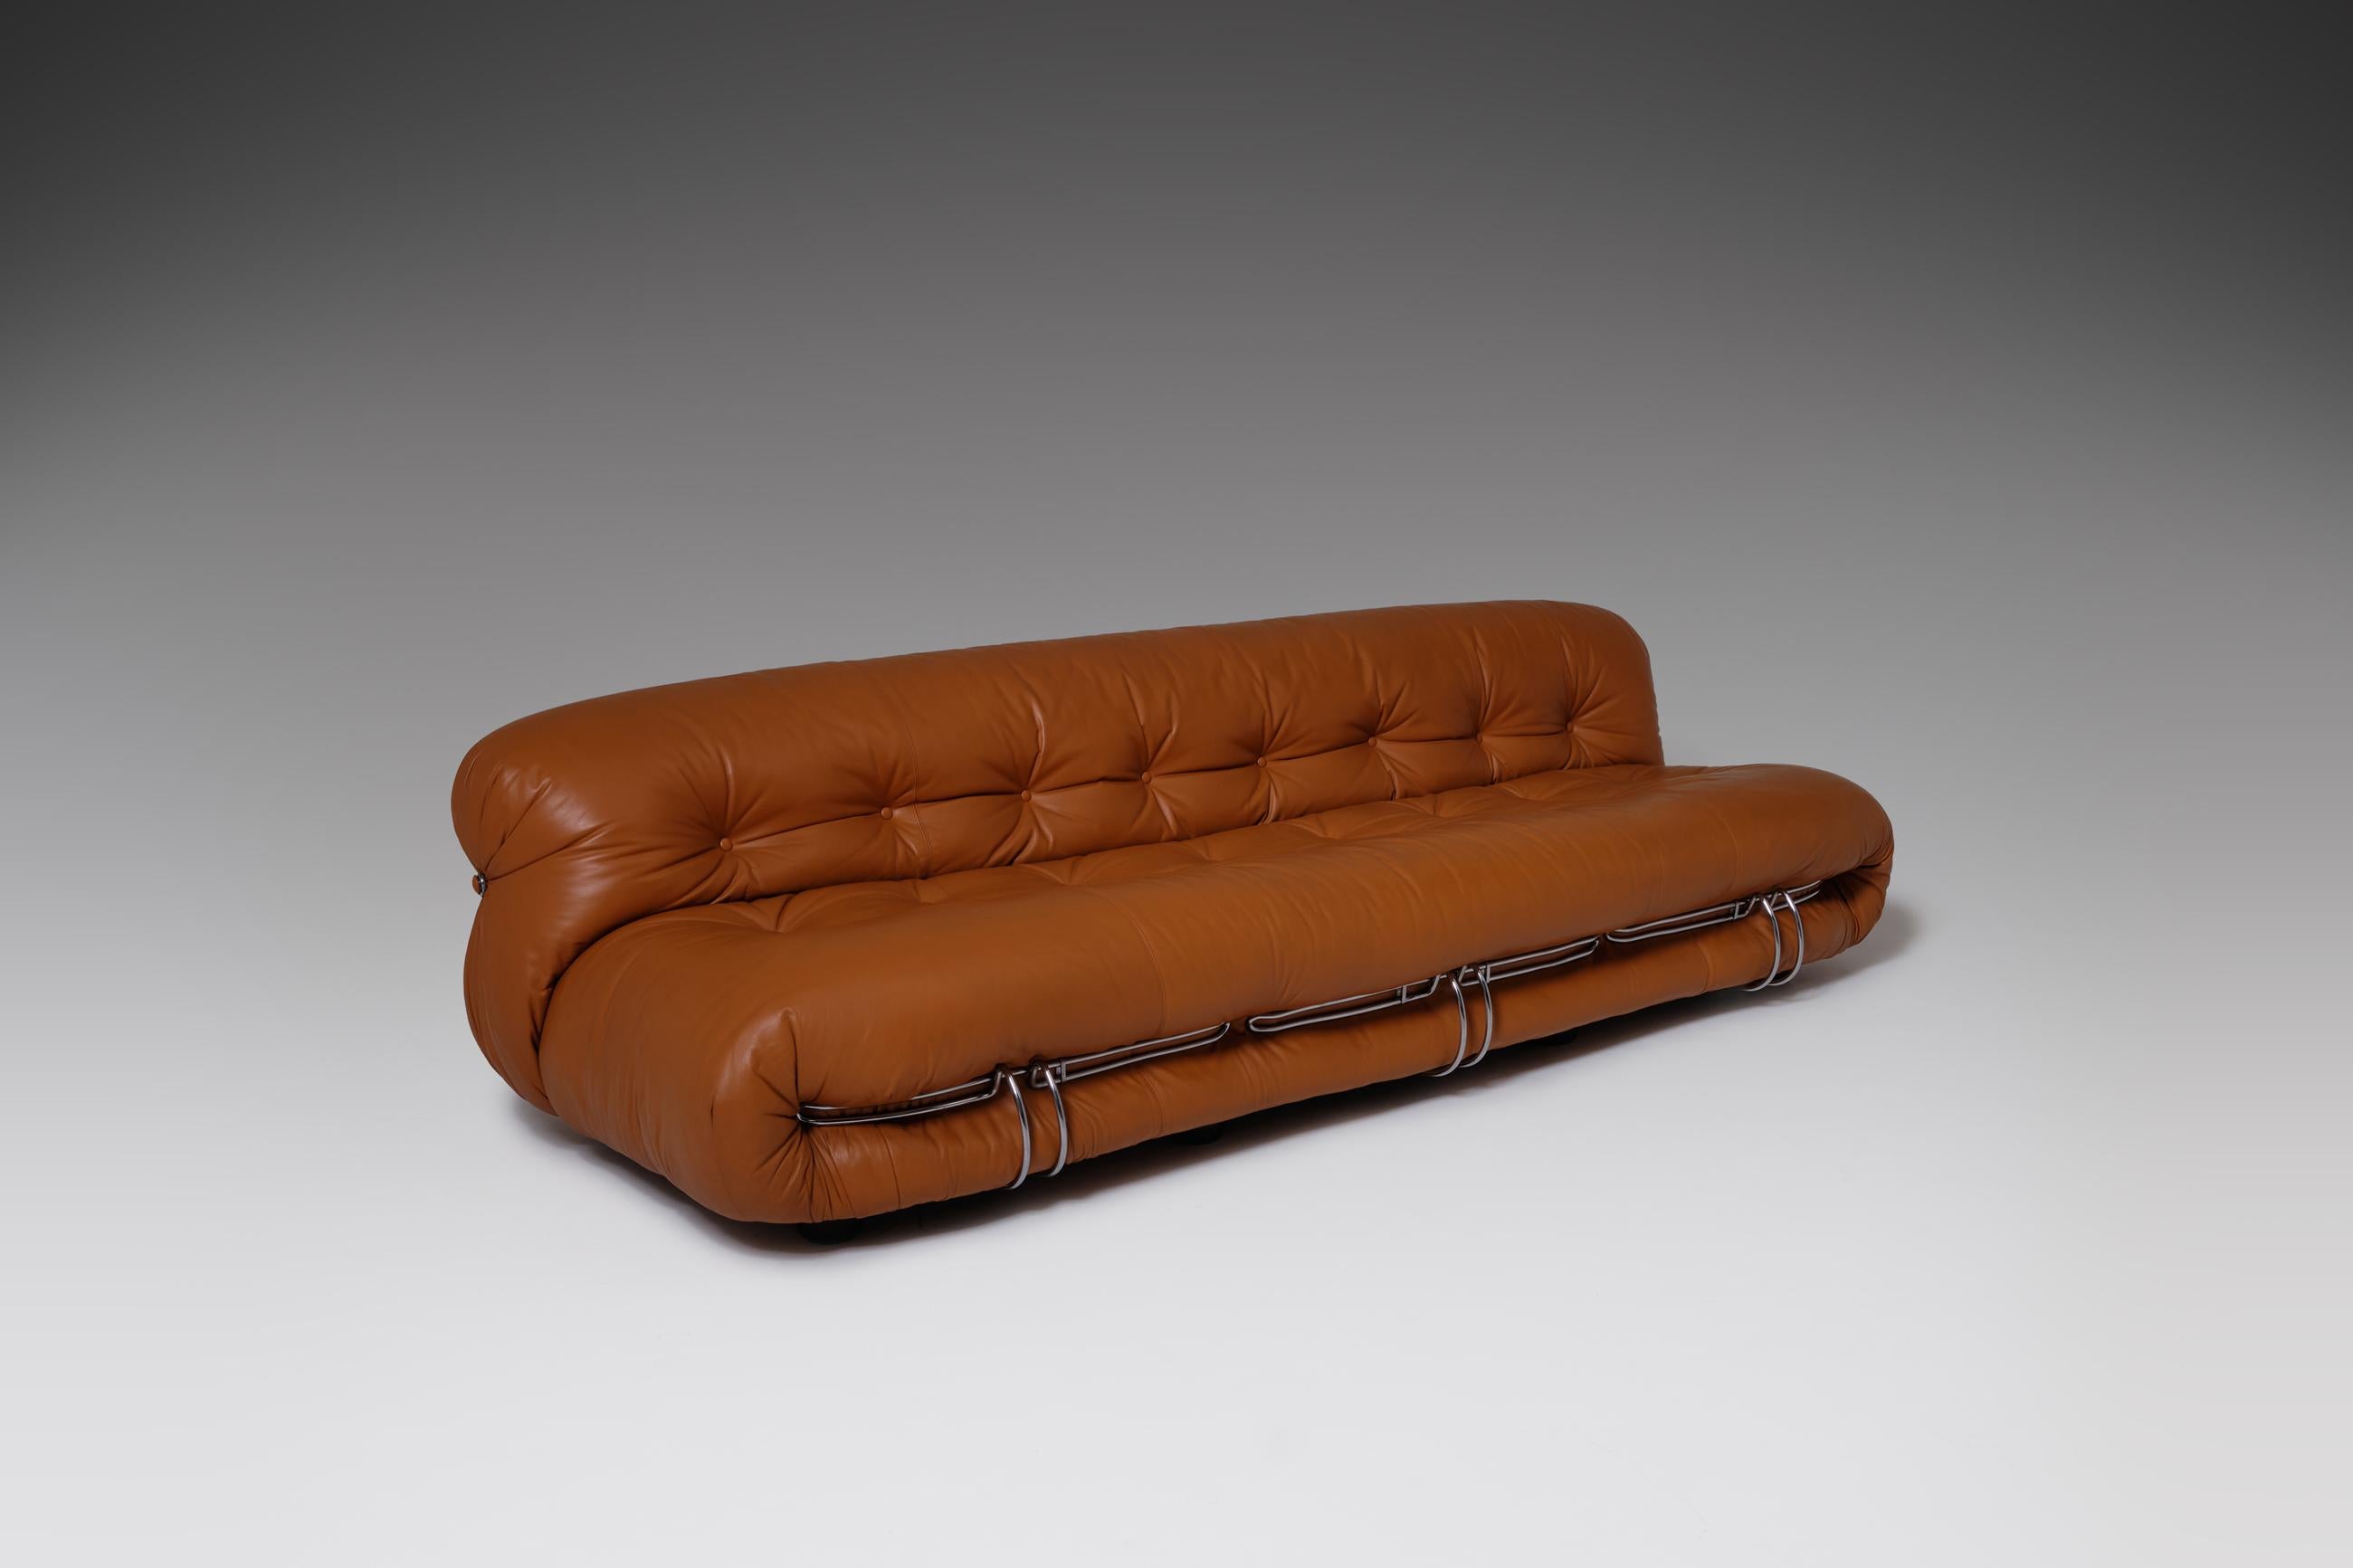 Italian Soriana Three-Seat Sofa in Cognac Leather by Afra & Tobia Scarpa, Italy, 1969